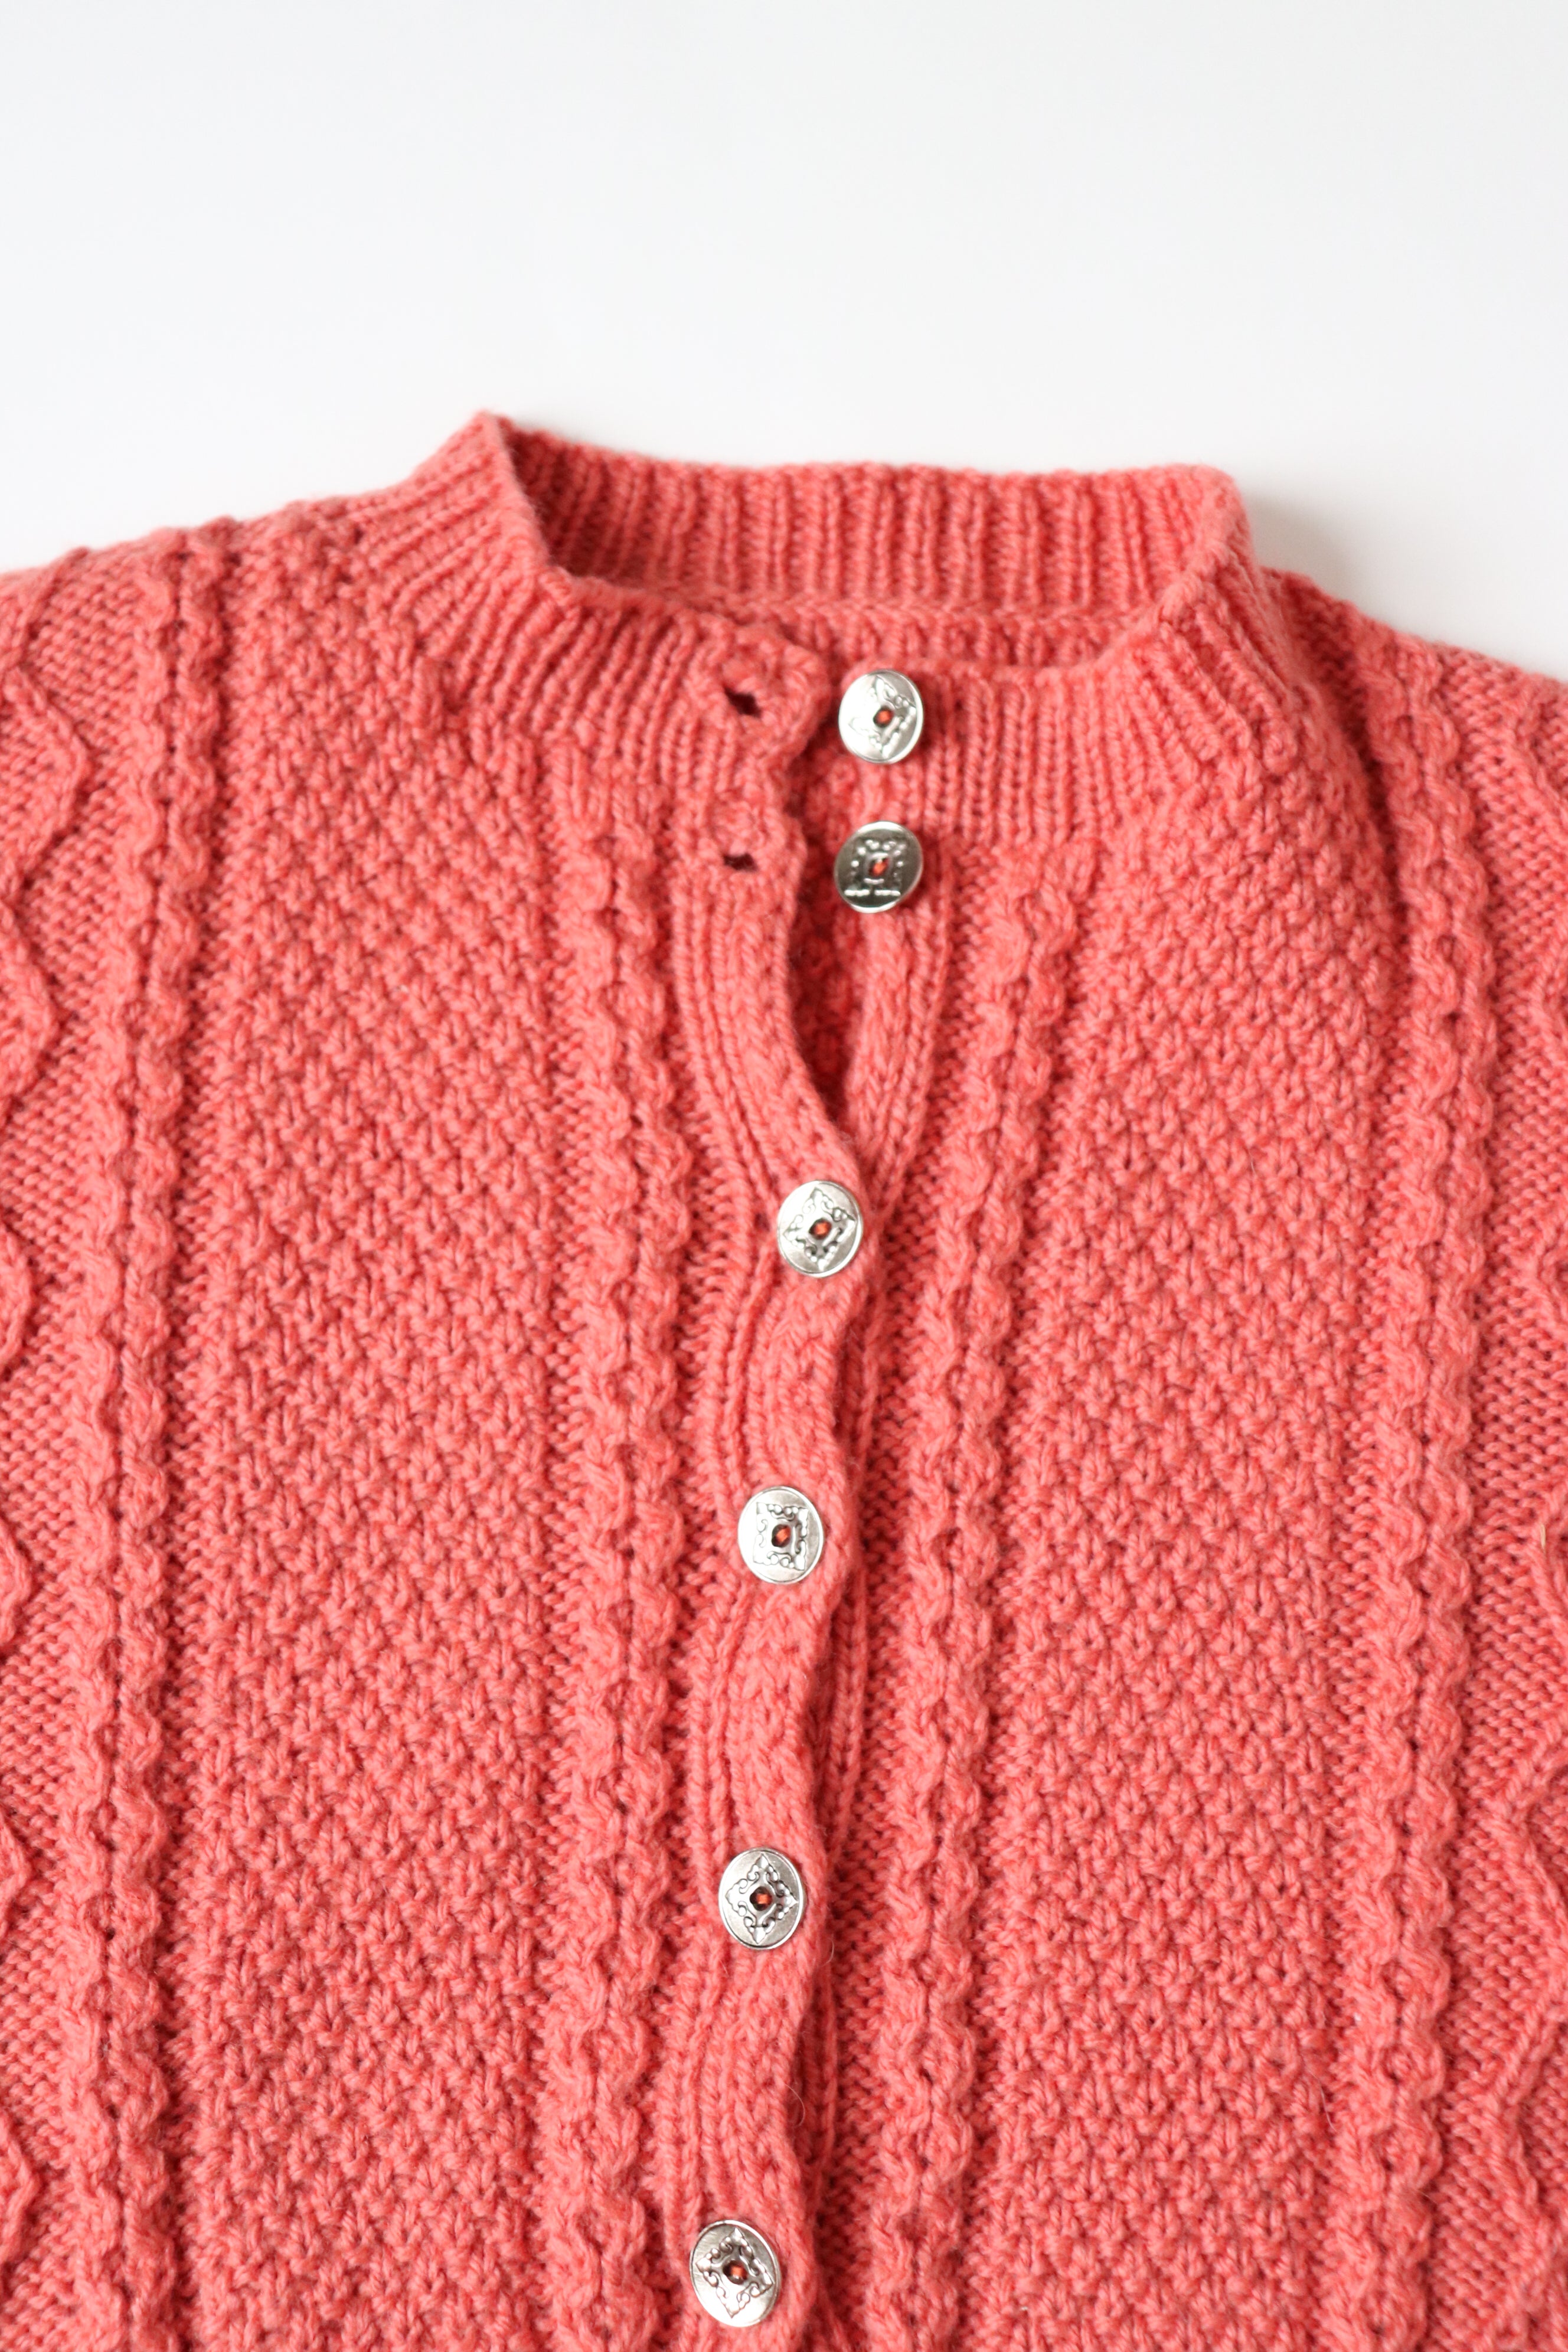 Coral Orange Cable Knit Vintage Cardigan - 1960s - Wool Blend - M / UK 12